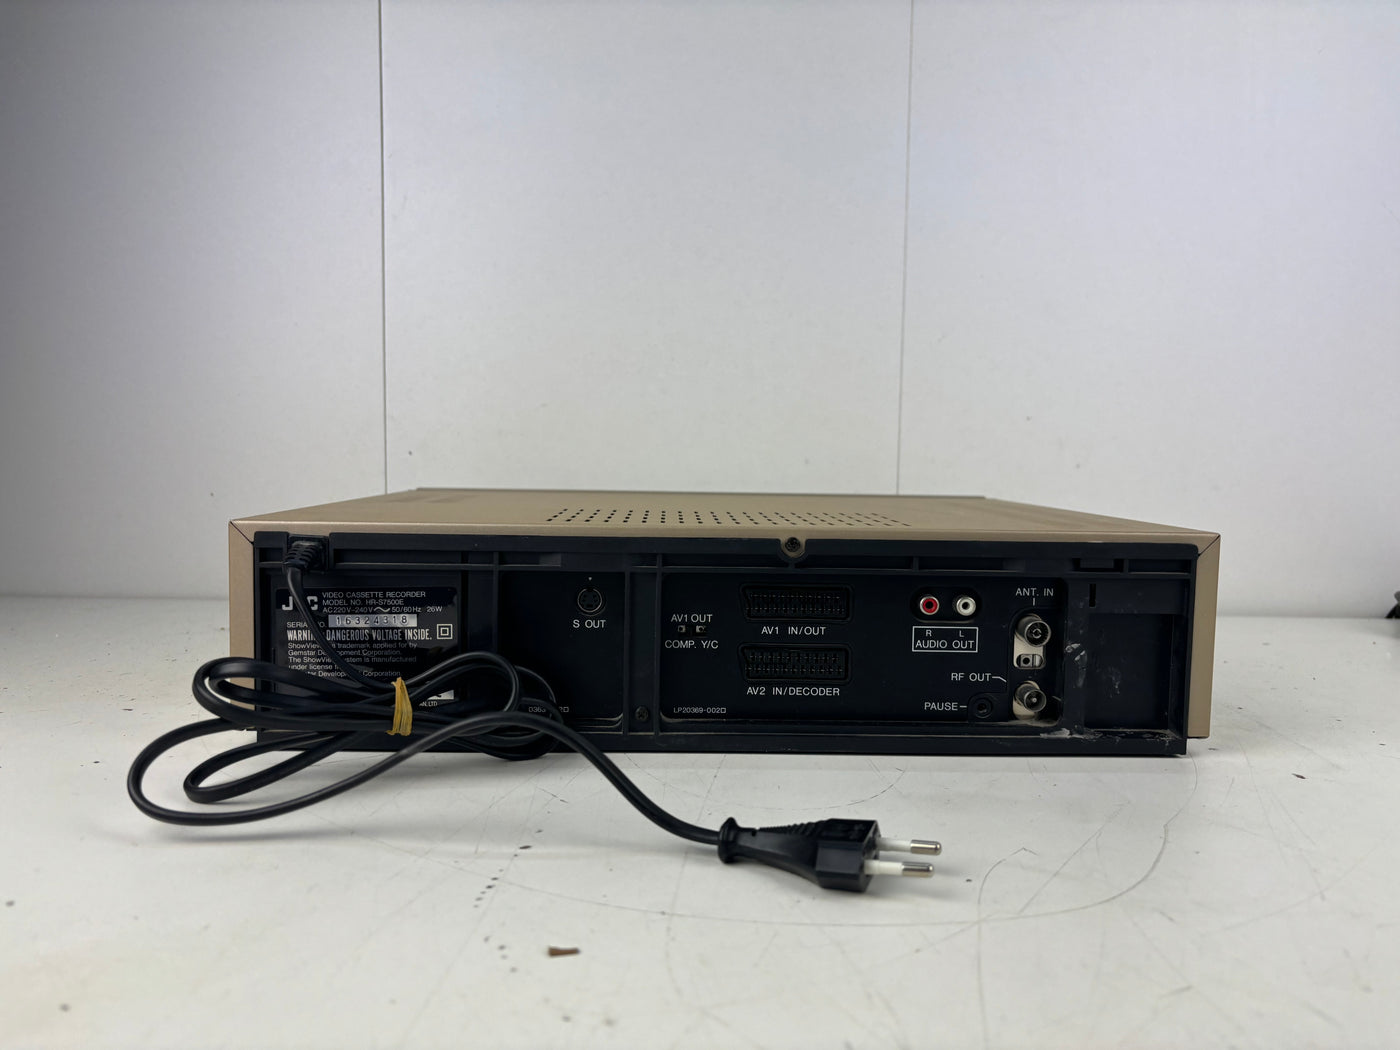 JVC HR-S7500E VHS Videorecorder - Super VHS